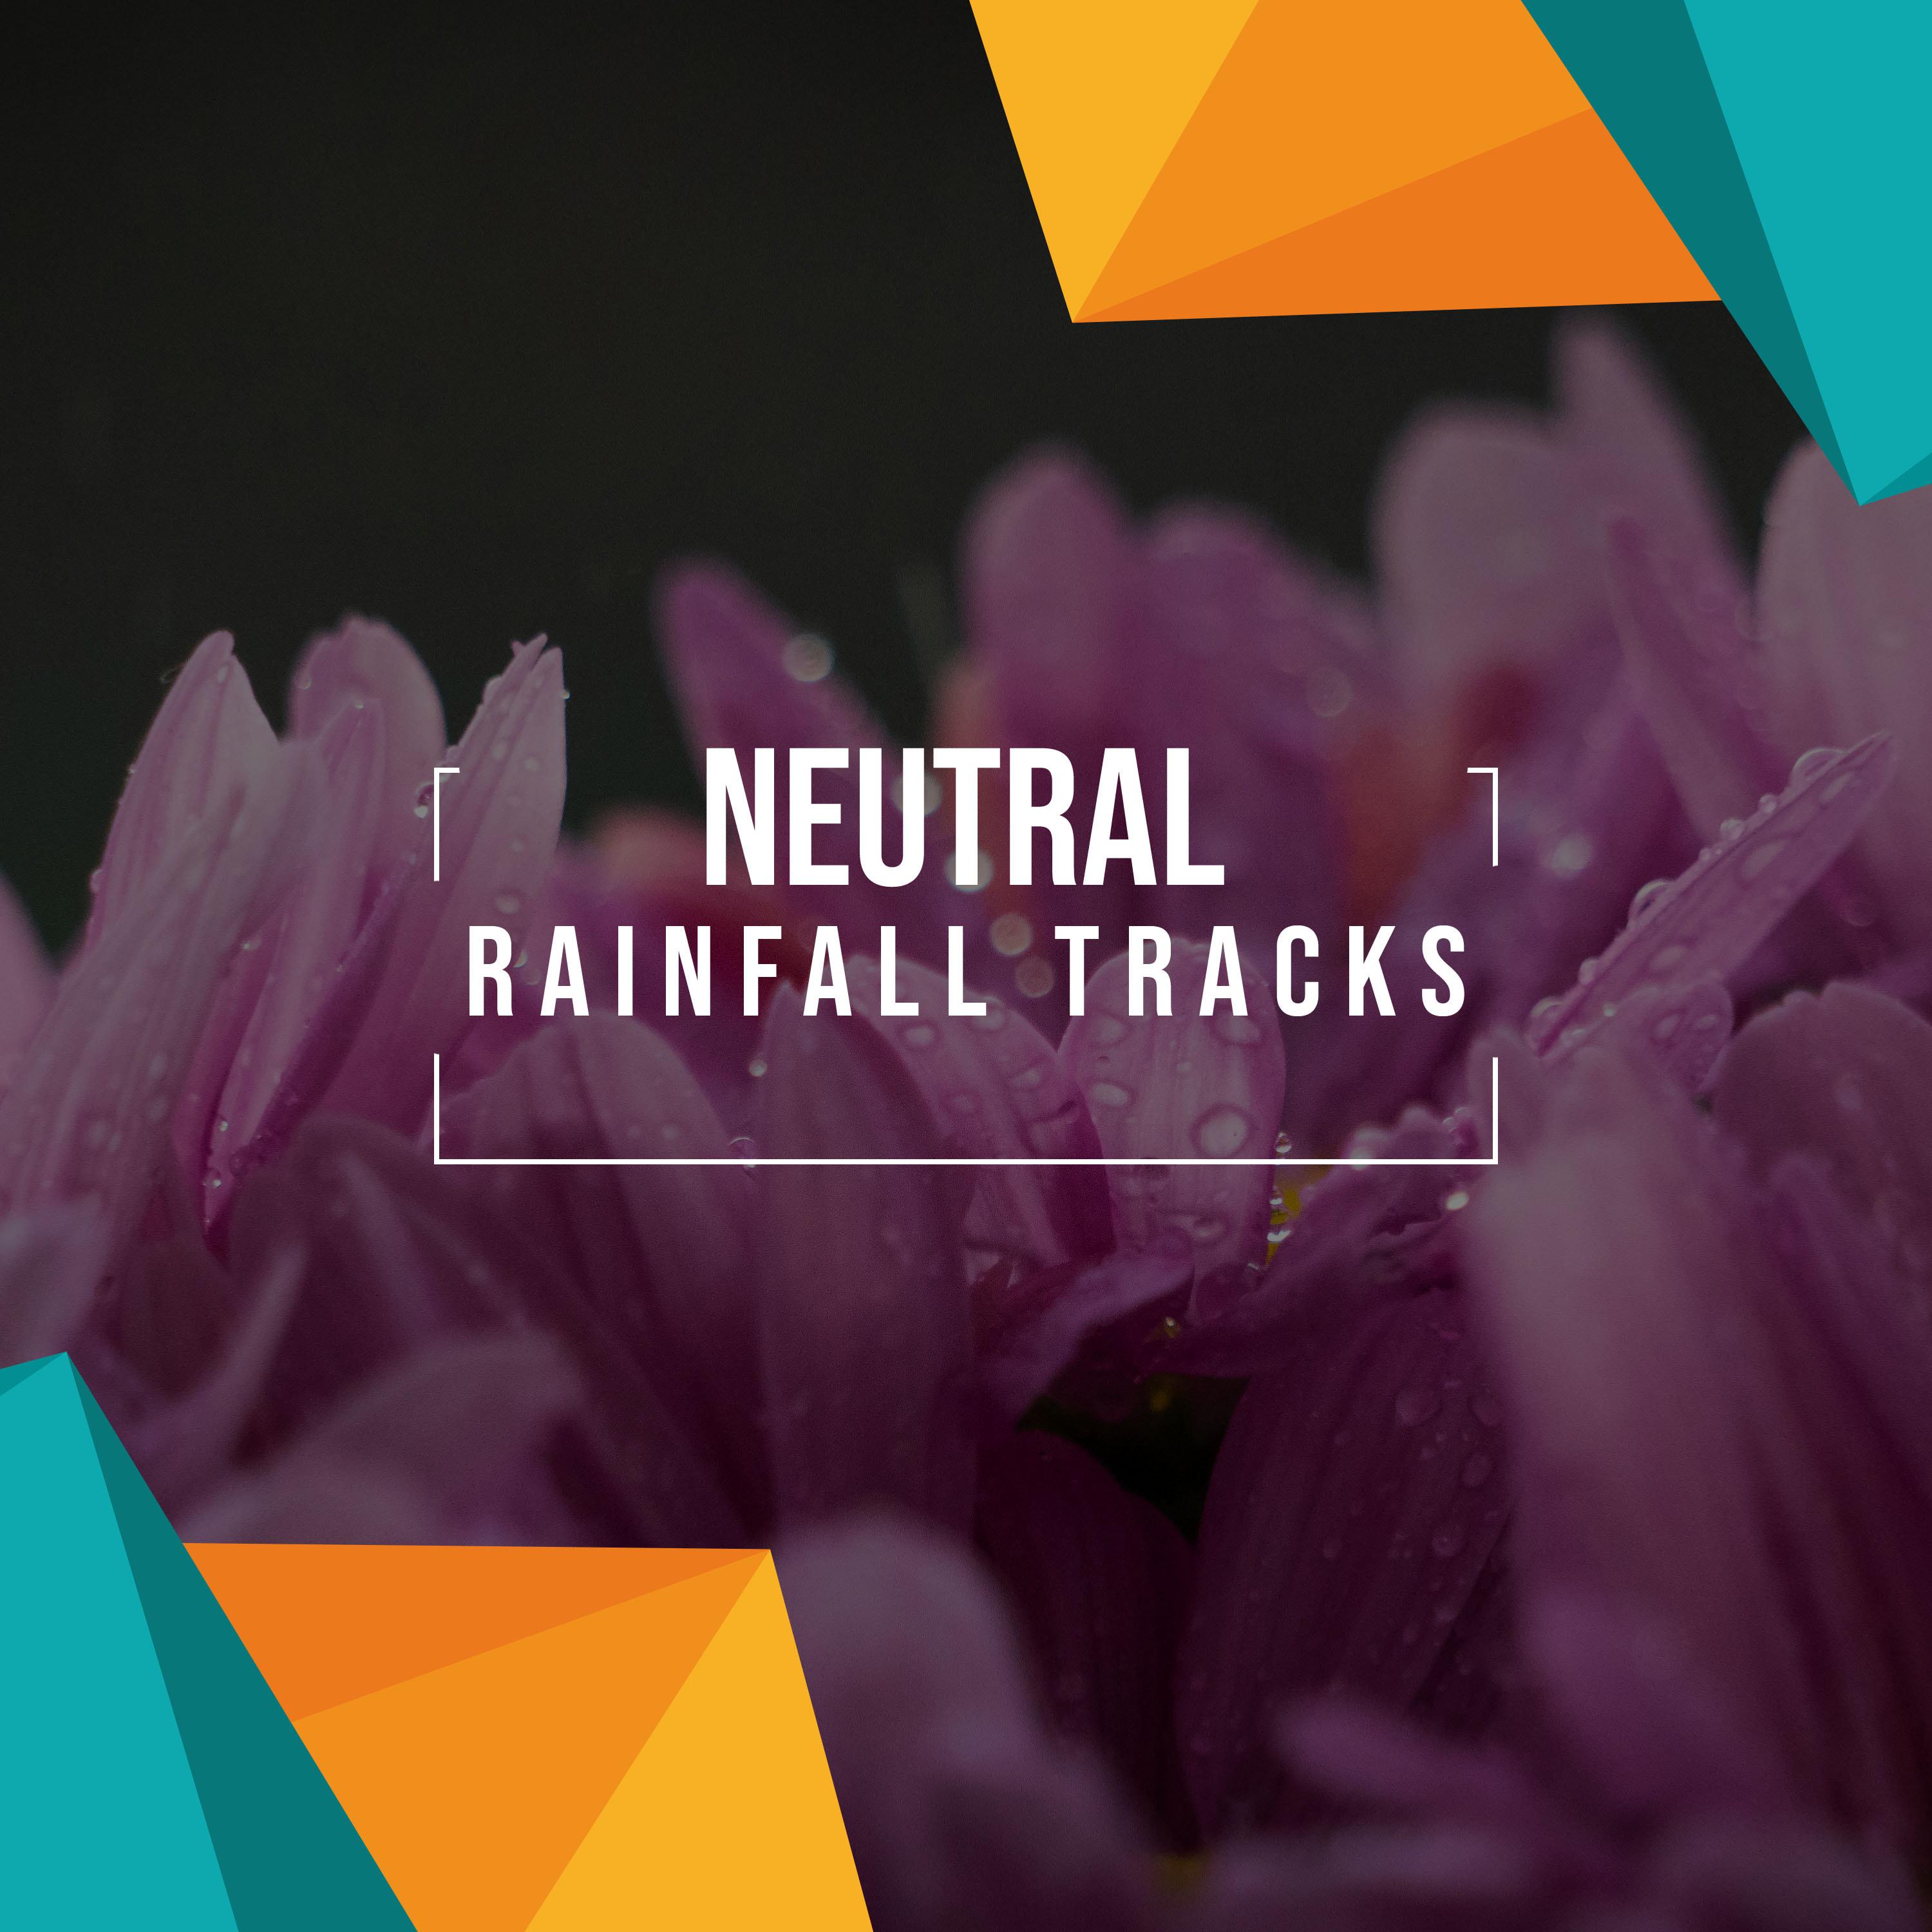 #19 Neutral Rainfall Tracks for Spa and Meditation